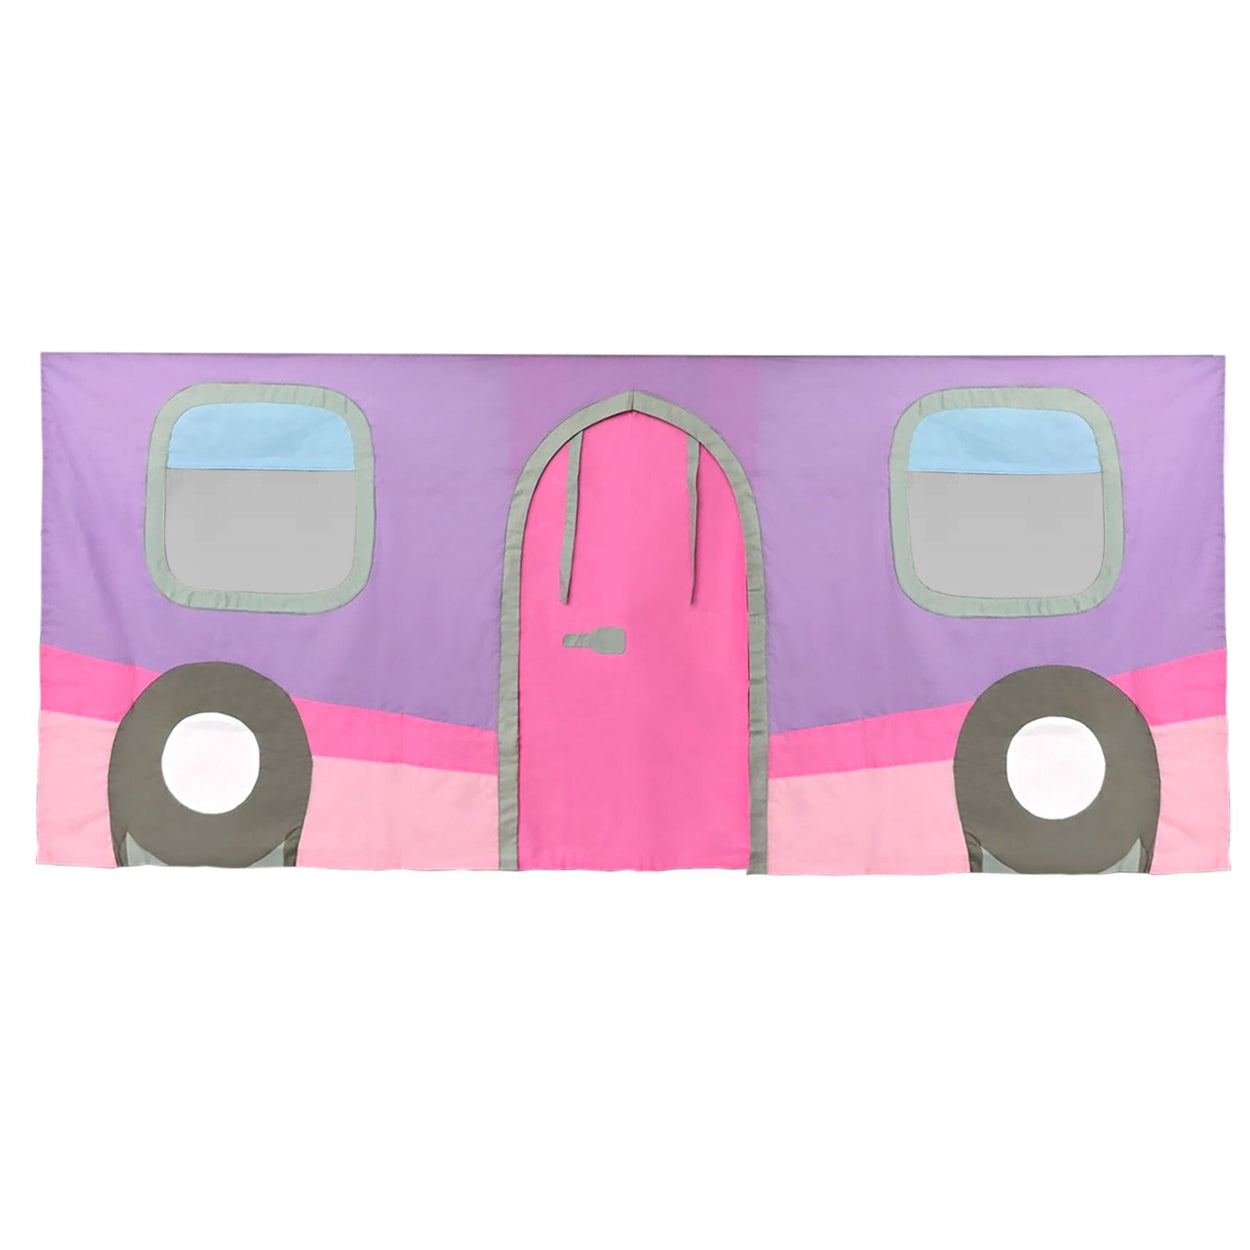 180032-056 : Curtain Camper Van Curtain, Pink/Purple